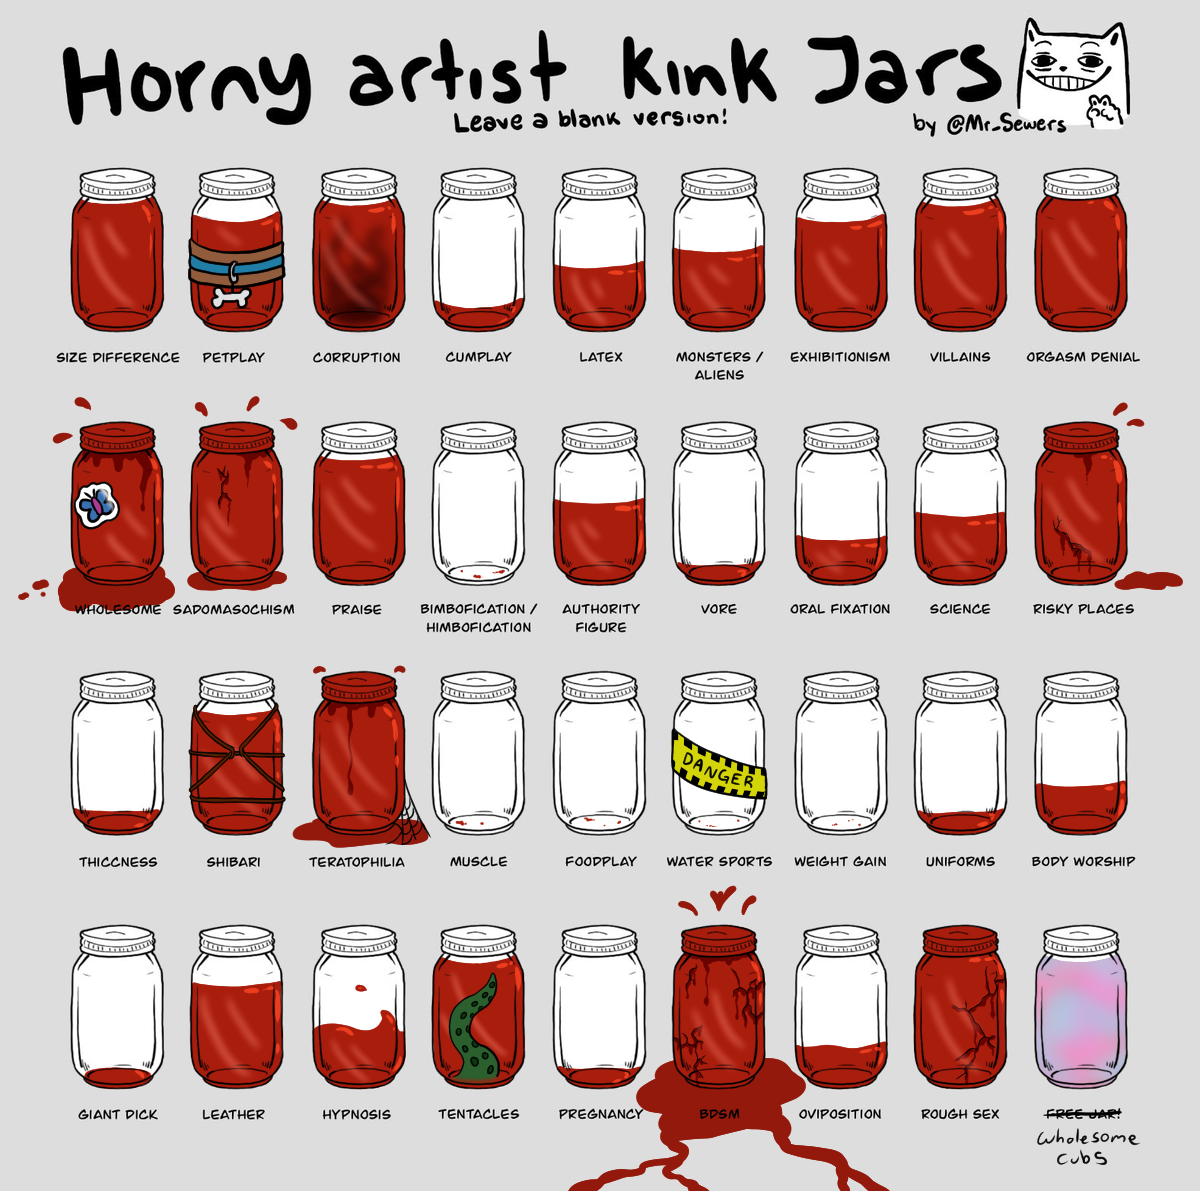 Horny artist kink jar